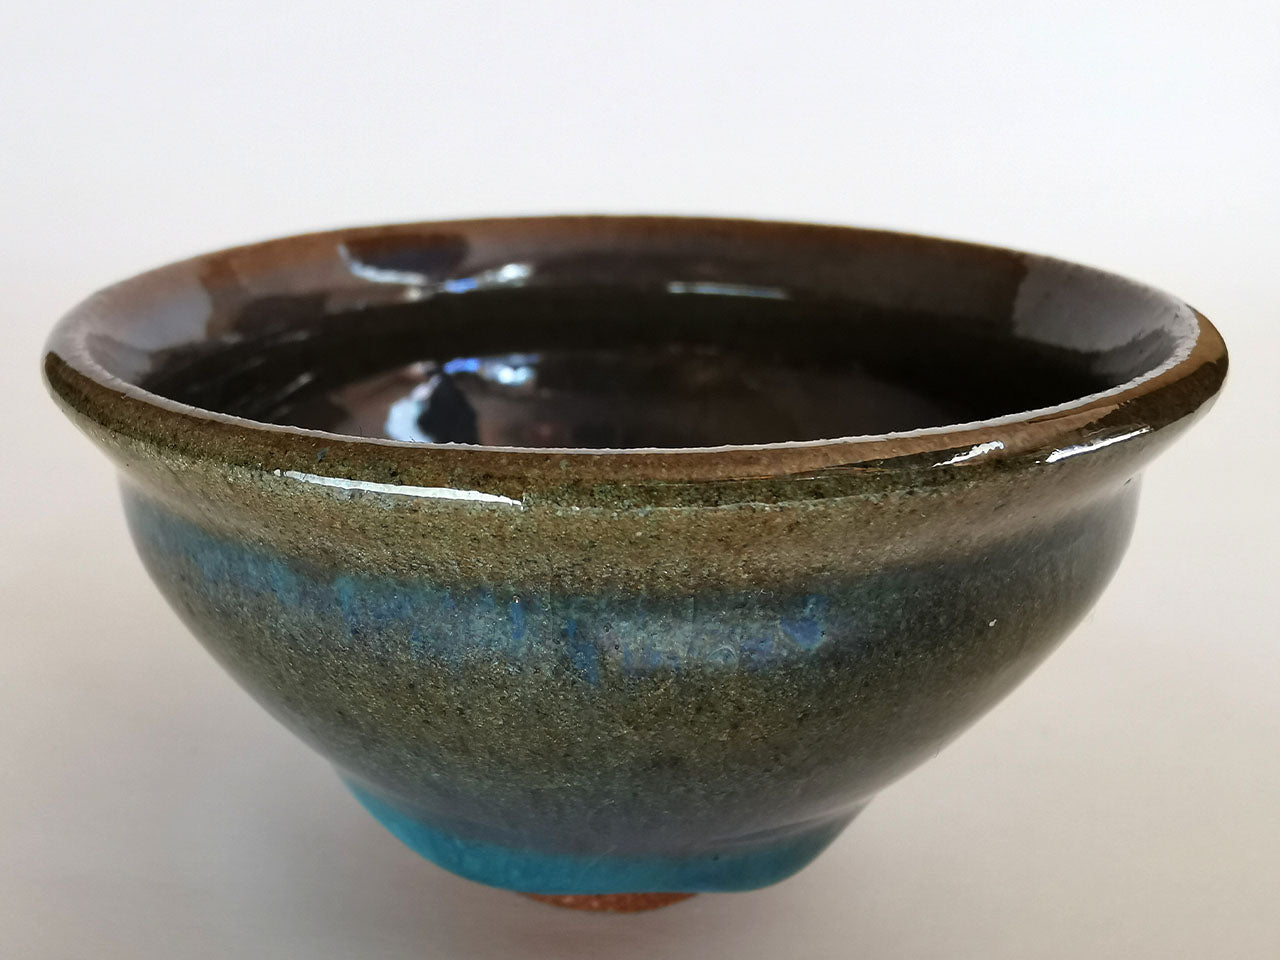 Drinkware, Large sake cup, Blue colored, Tenmoku, Deep type - Tea cup, Toshinori Munakata, Aizuhongo ware, Ceramics